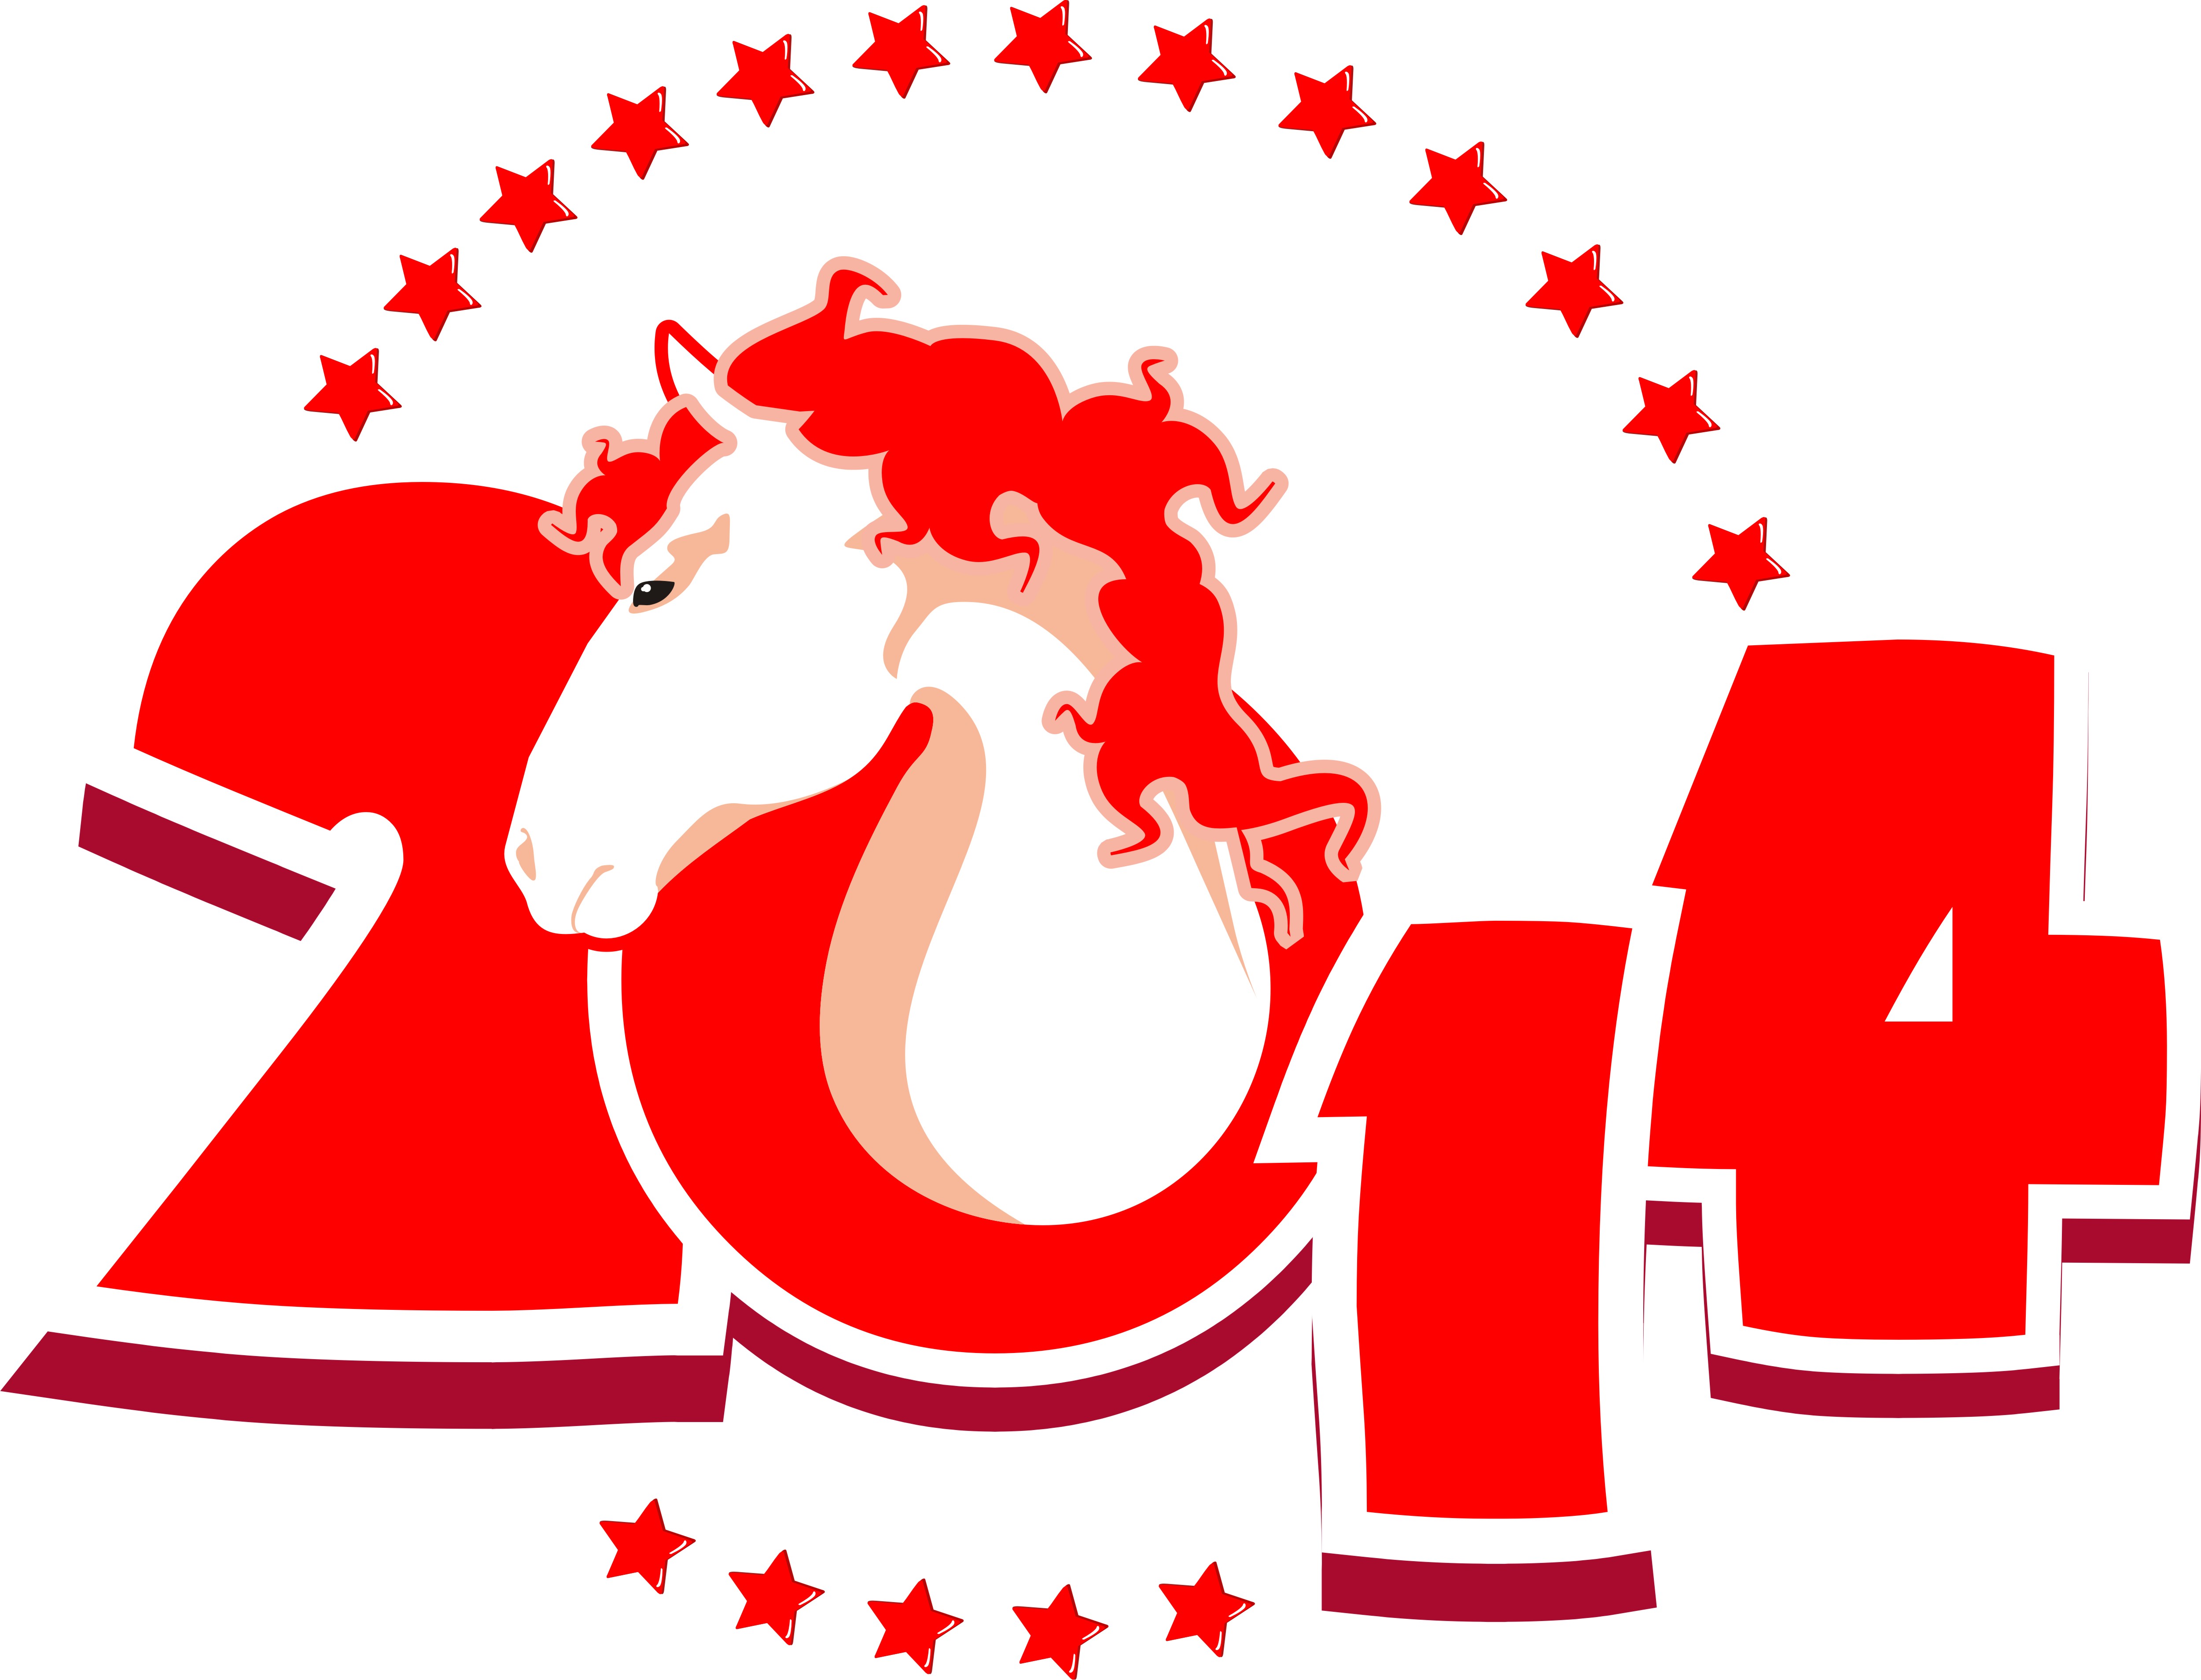 Creative 2014 horses vector graphic 03